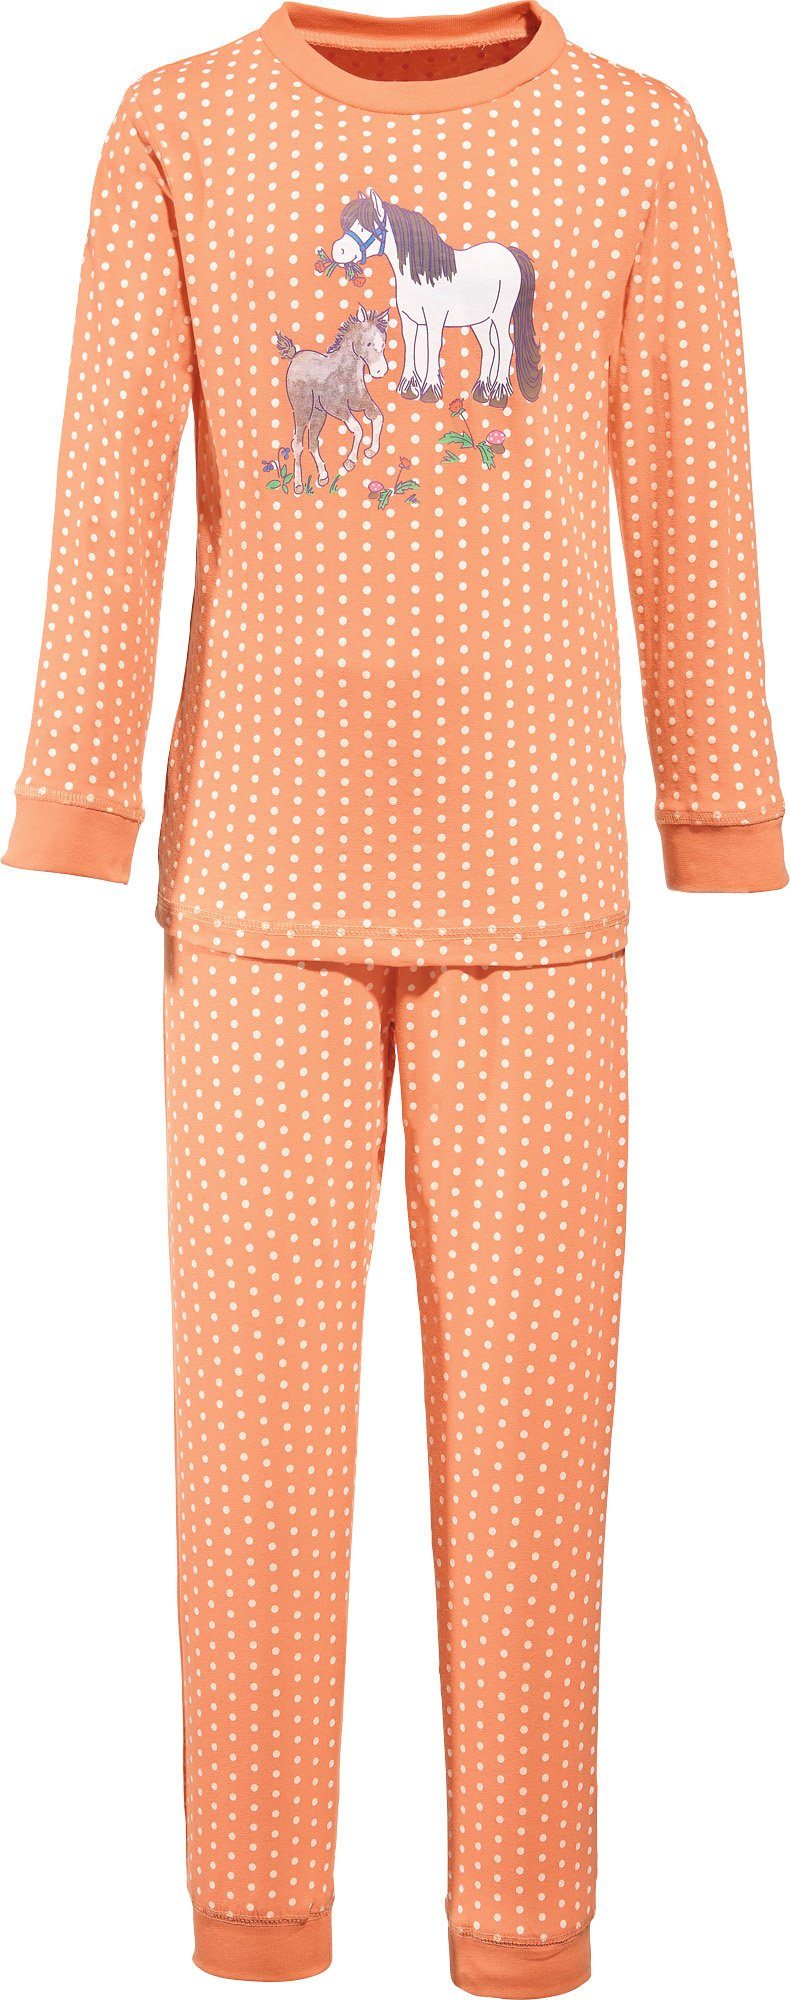 Kinder Kinderunterwäsche Erwin Müller Pyjama Kinder-Schlafanzug Single-Jersey Punkte